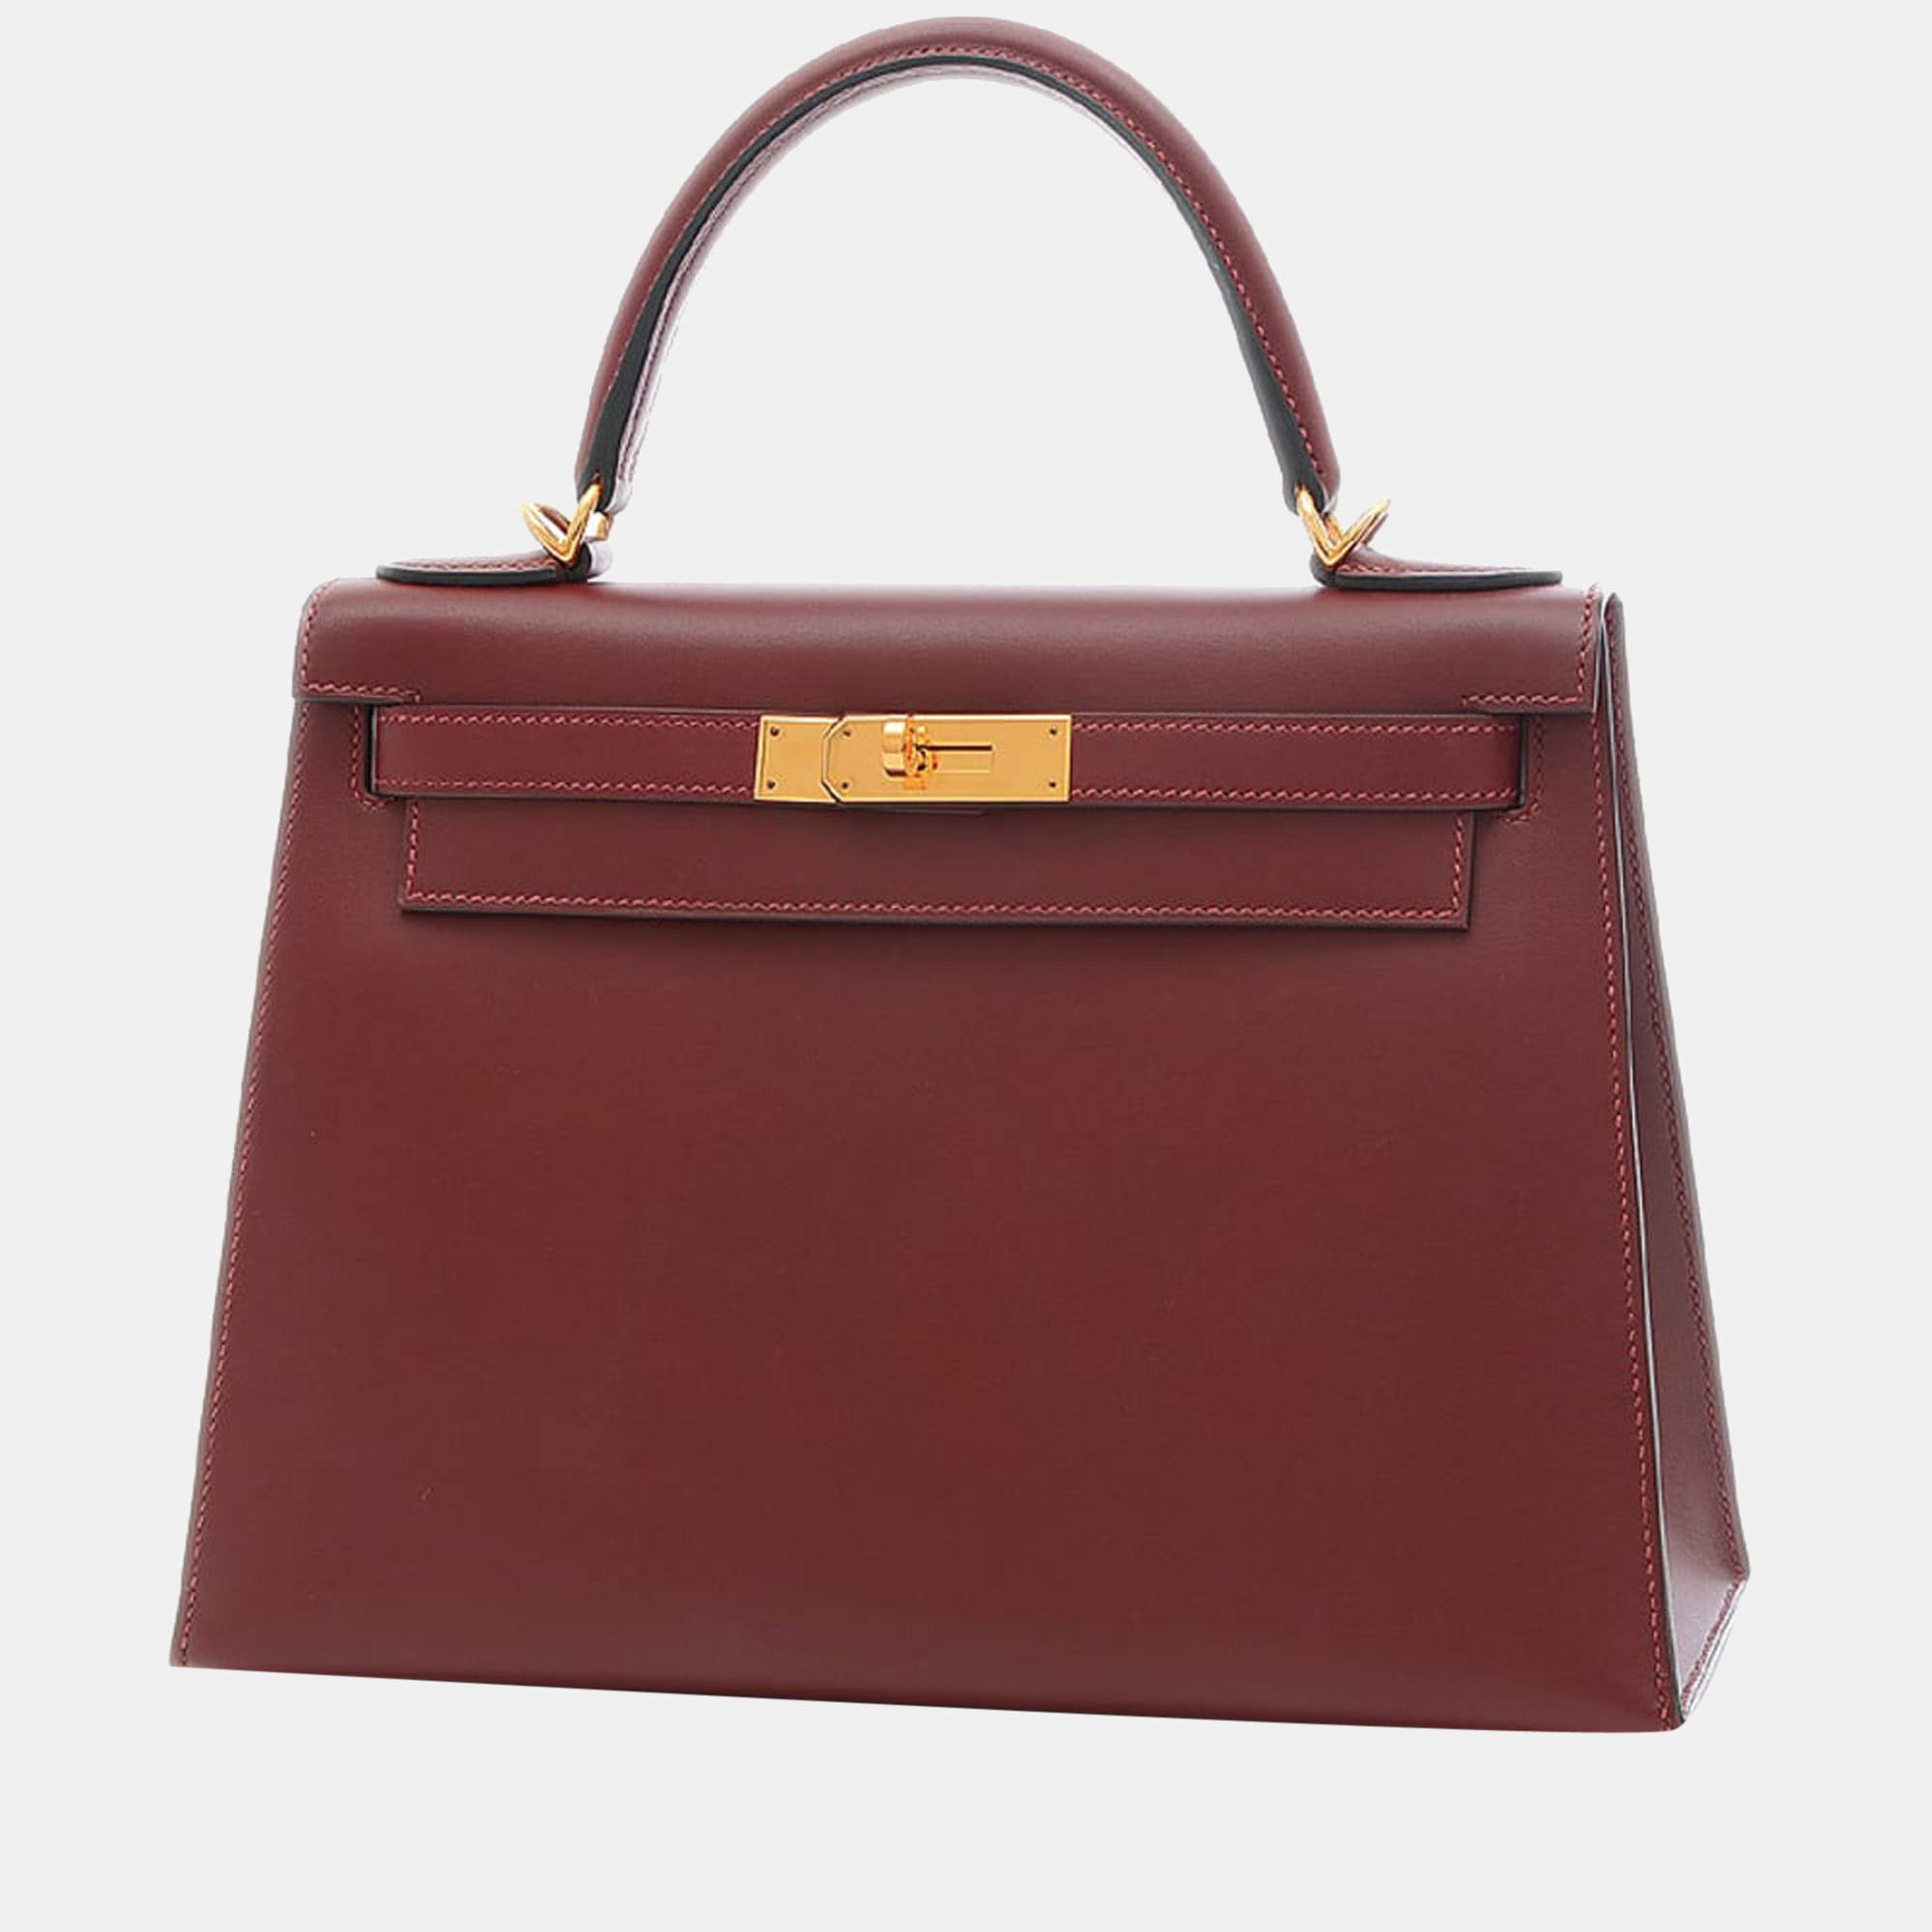 Kelly 28 leather handbag